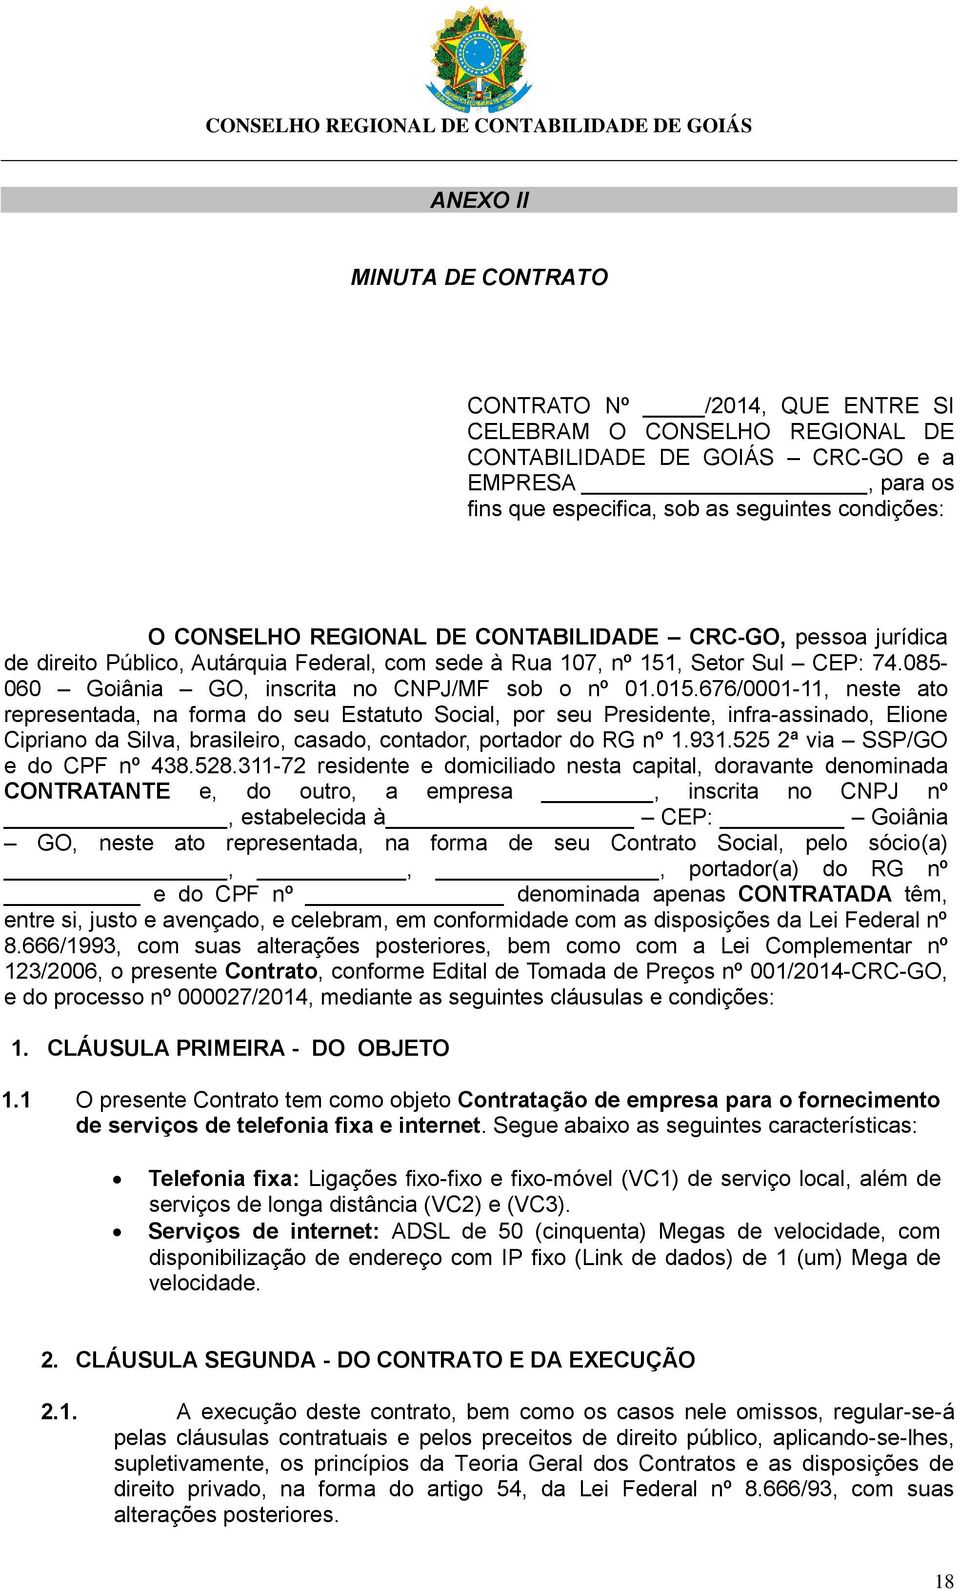 676/0001-11, neste ato representada, na forma do seu Estatuto Social, por seu Presidente, infra-assinado, Elione Cipriano da Silva, brasileiro, casado, contador, portador do RG nº 1.931.